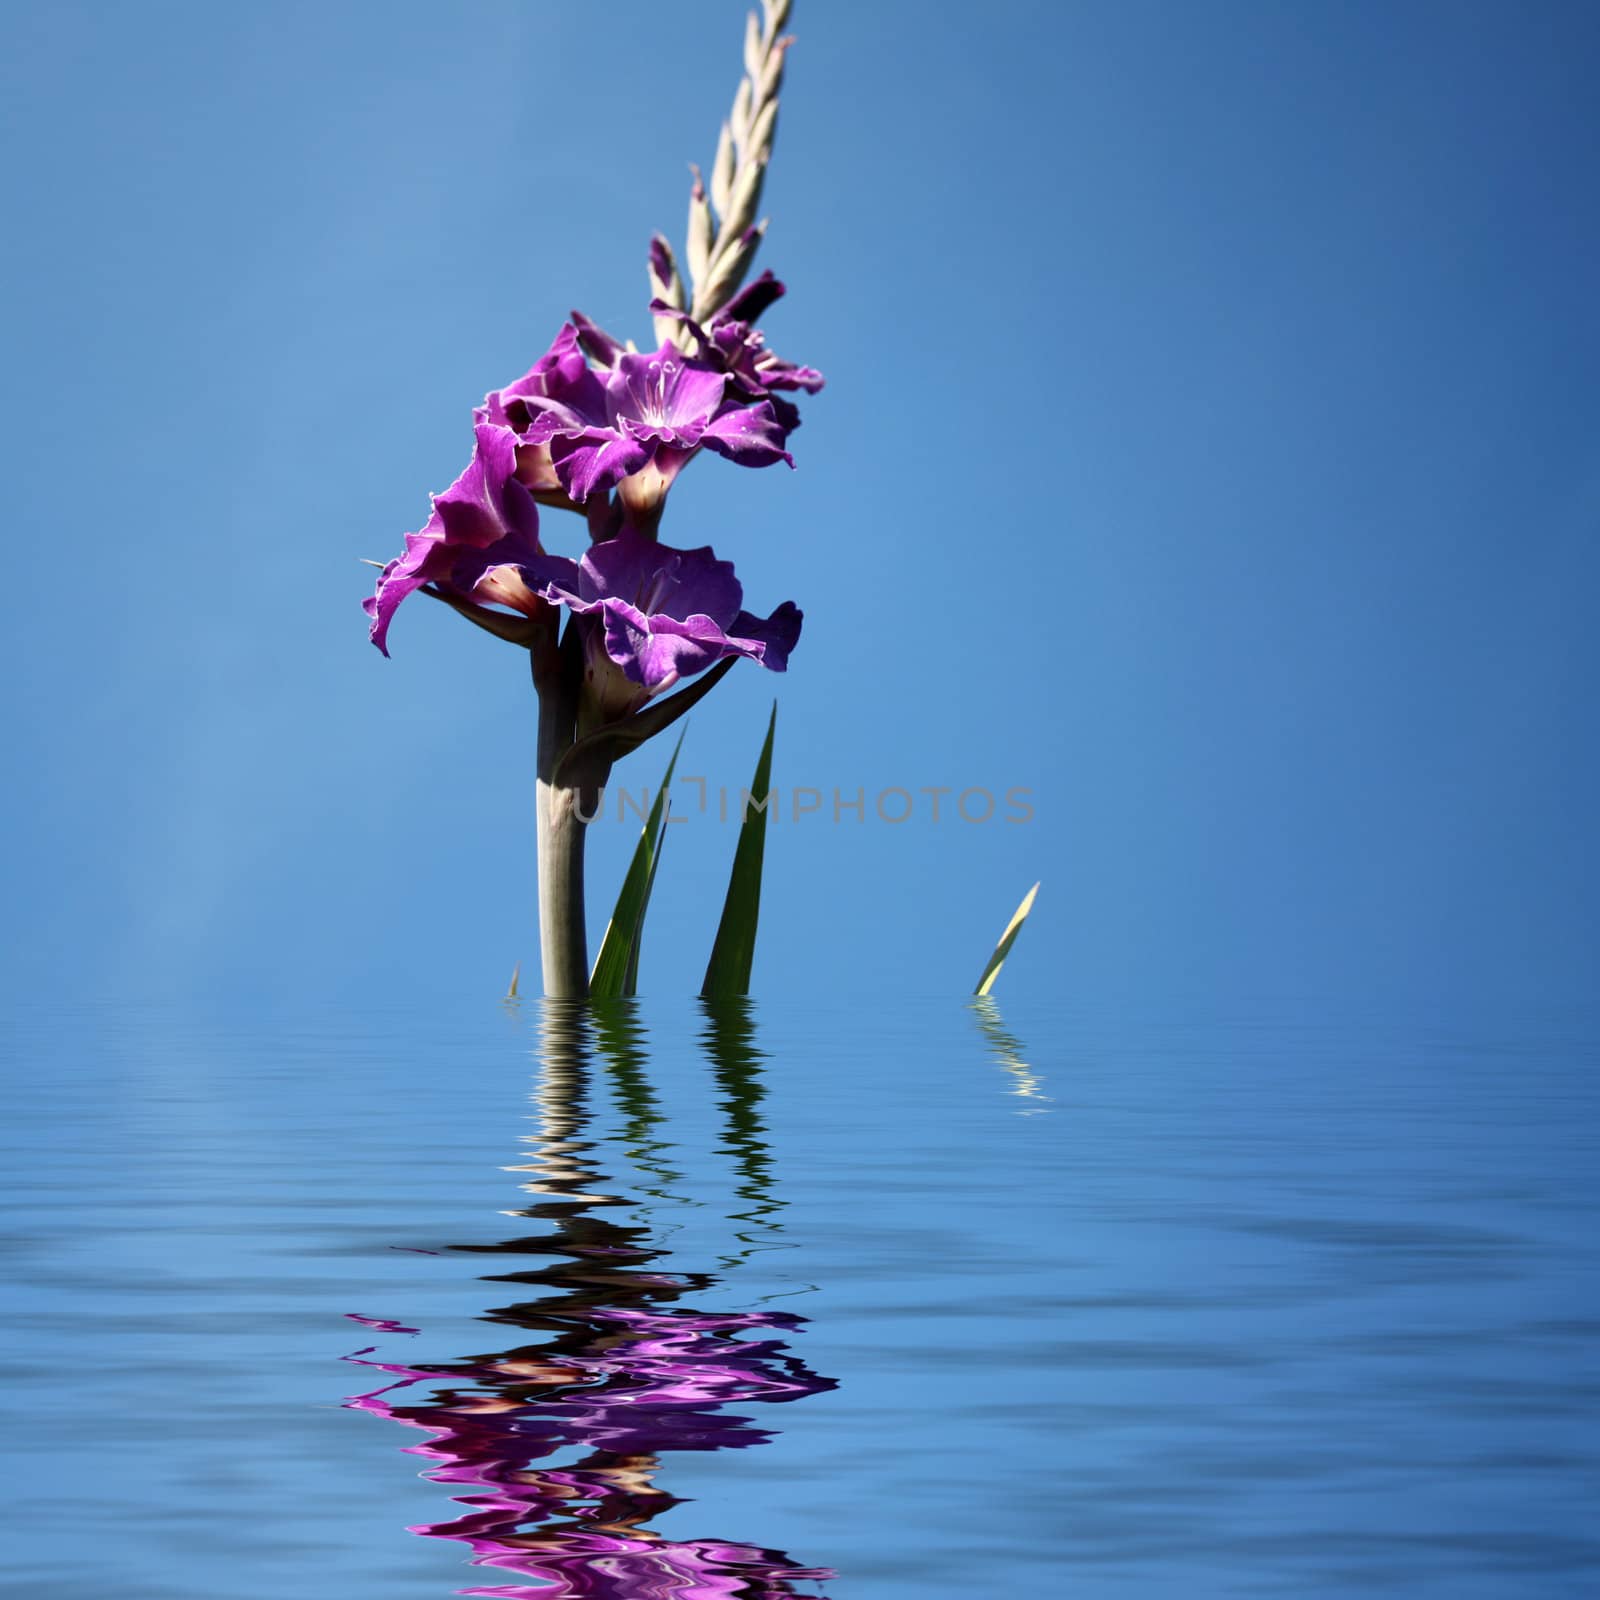 Close-up of a purple gladioli   by photochecker